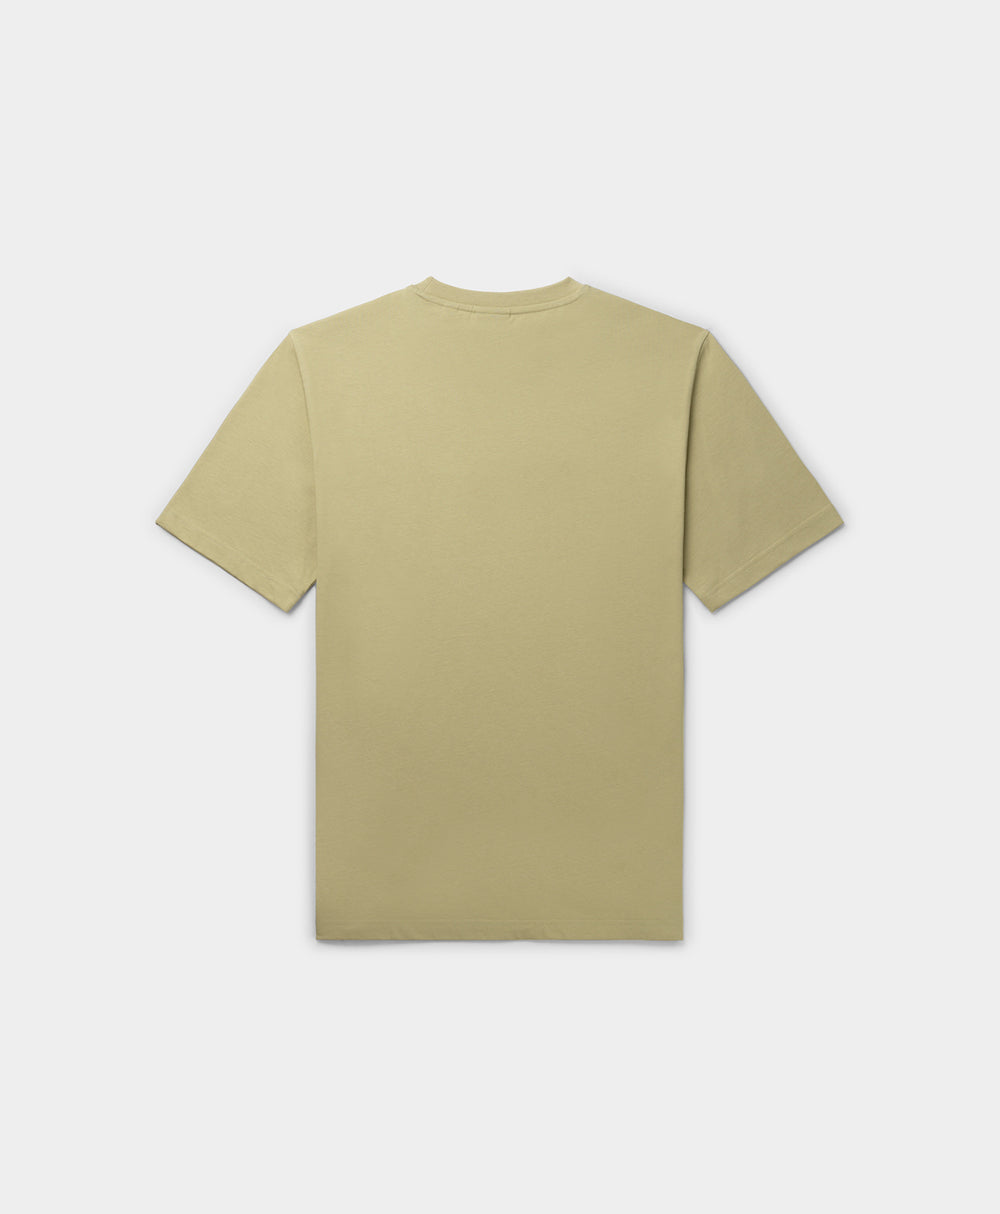 DP - Twill Beige Escript T-Shirt - Packshot - Rear